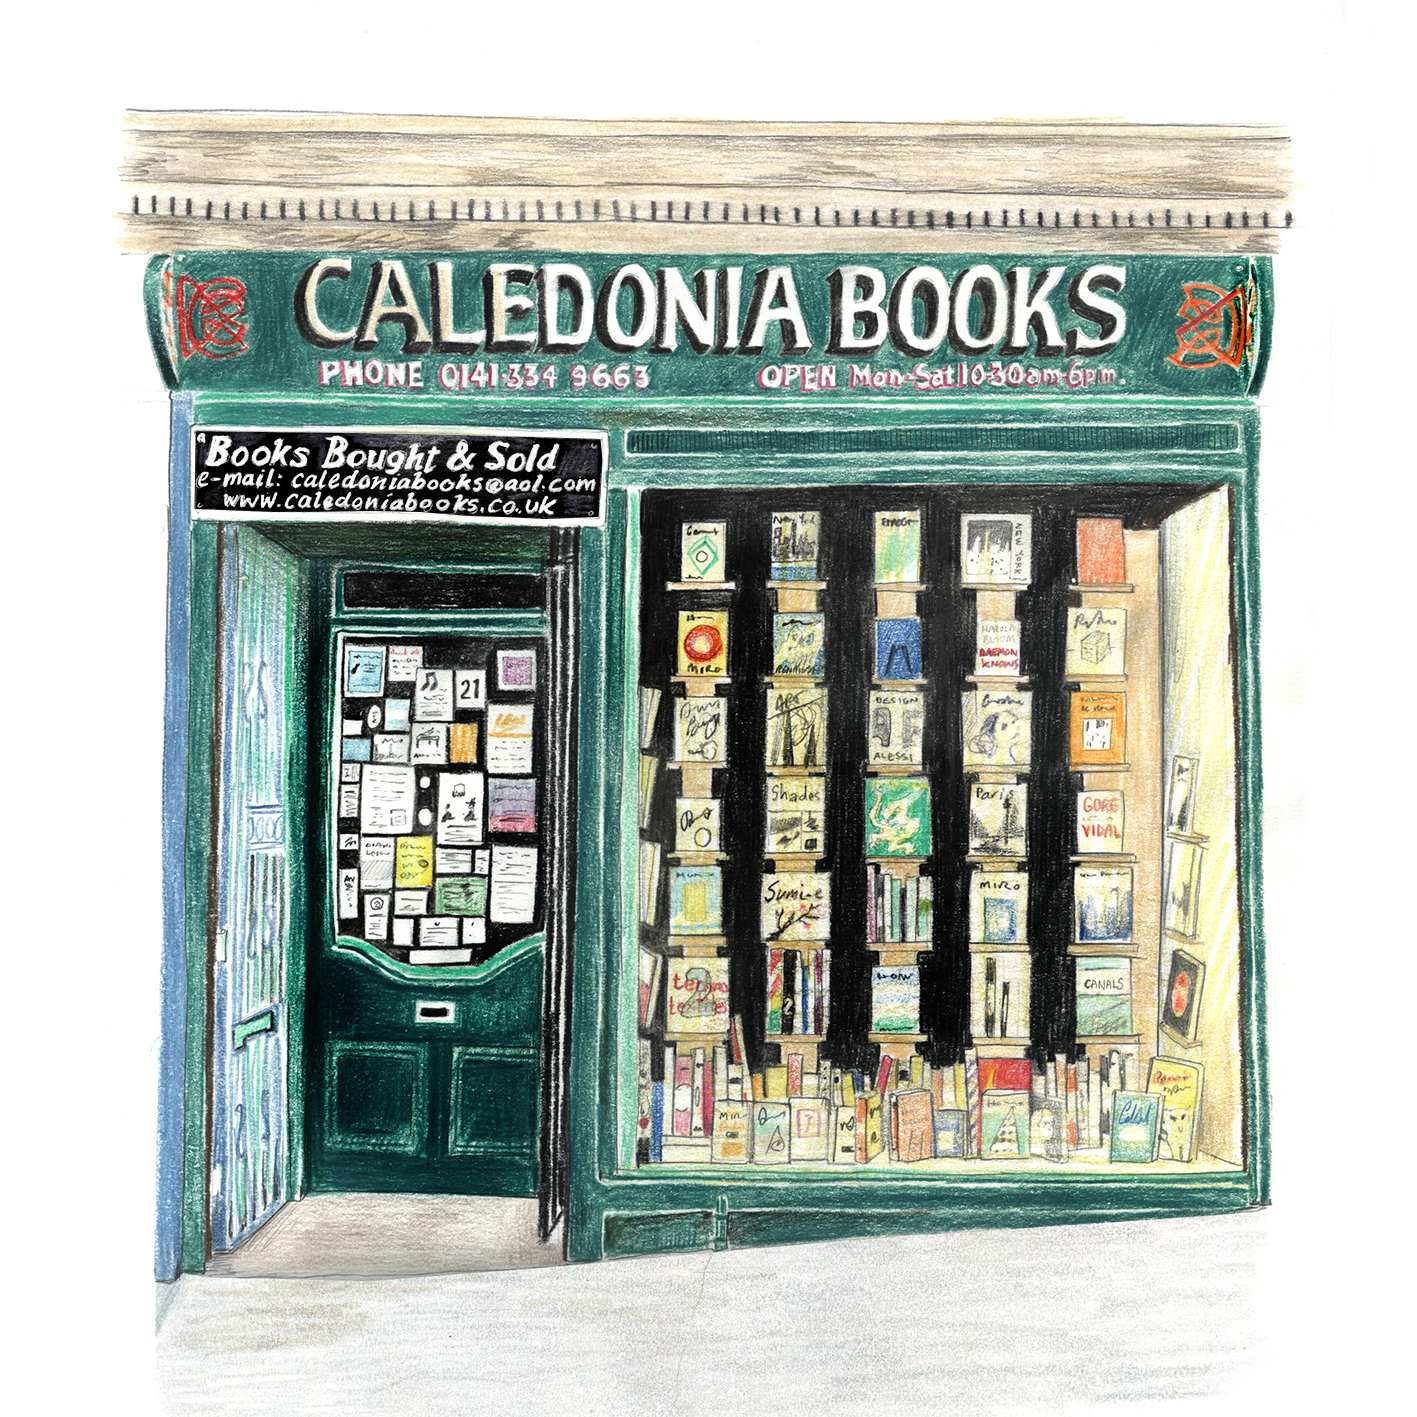 Caledonia Books A4 print